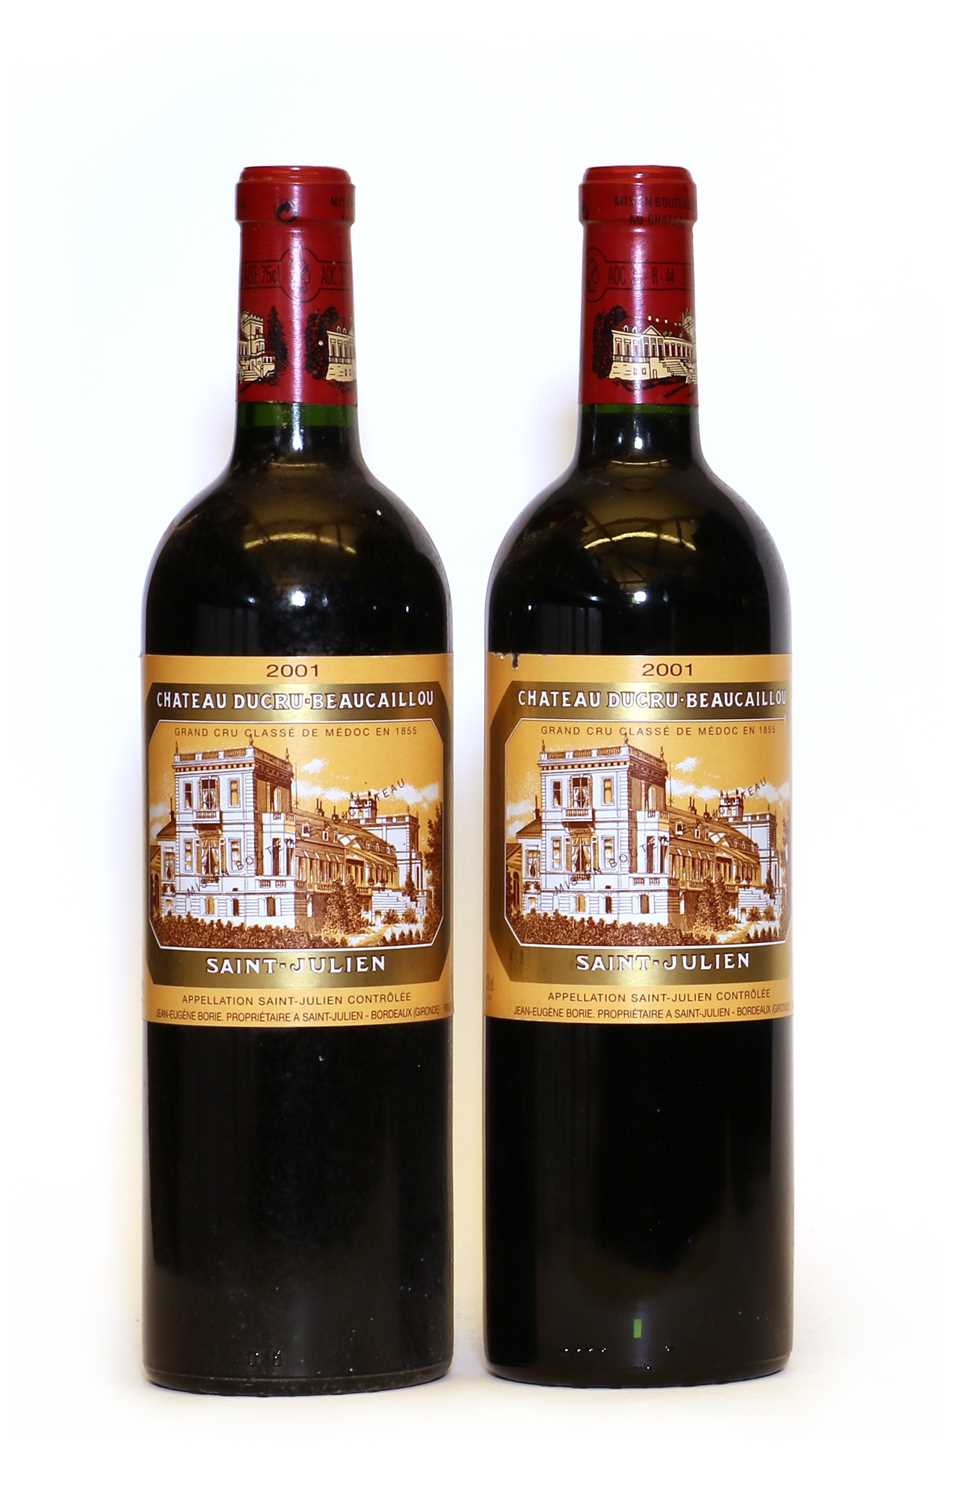 Chateau Ducru Beaucaillou, 2eme Cru Classe, St Julien, 2001, two bottles